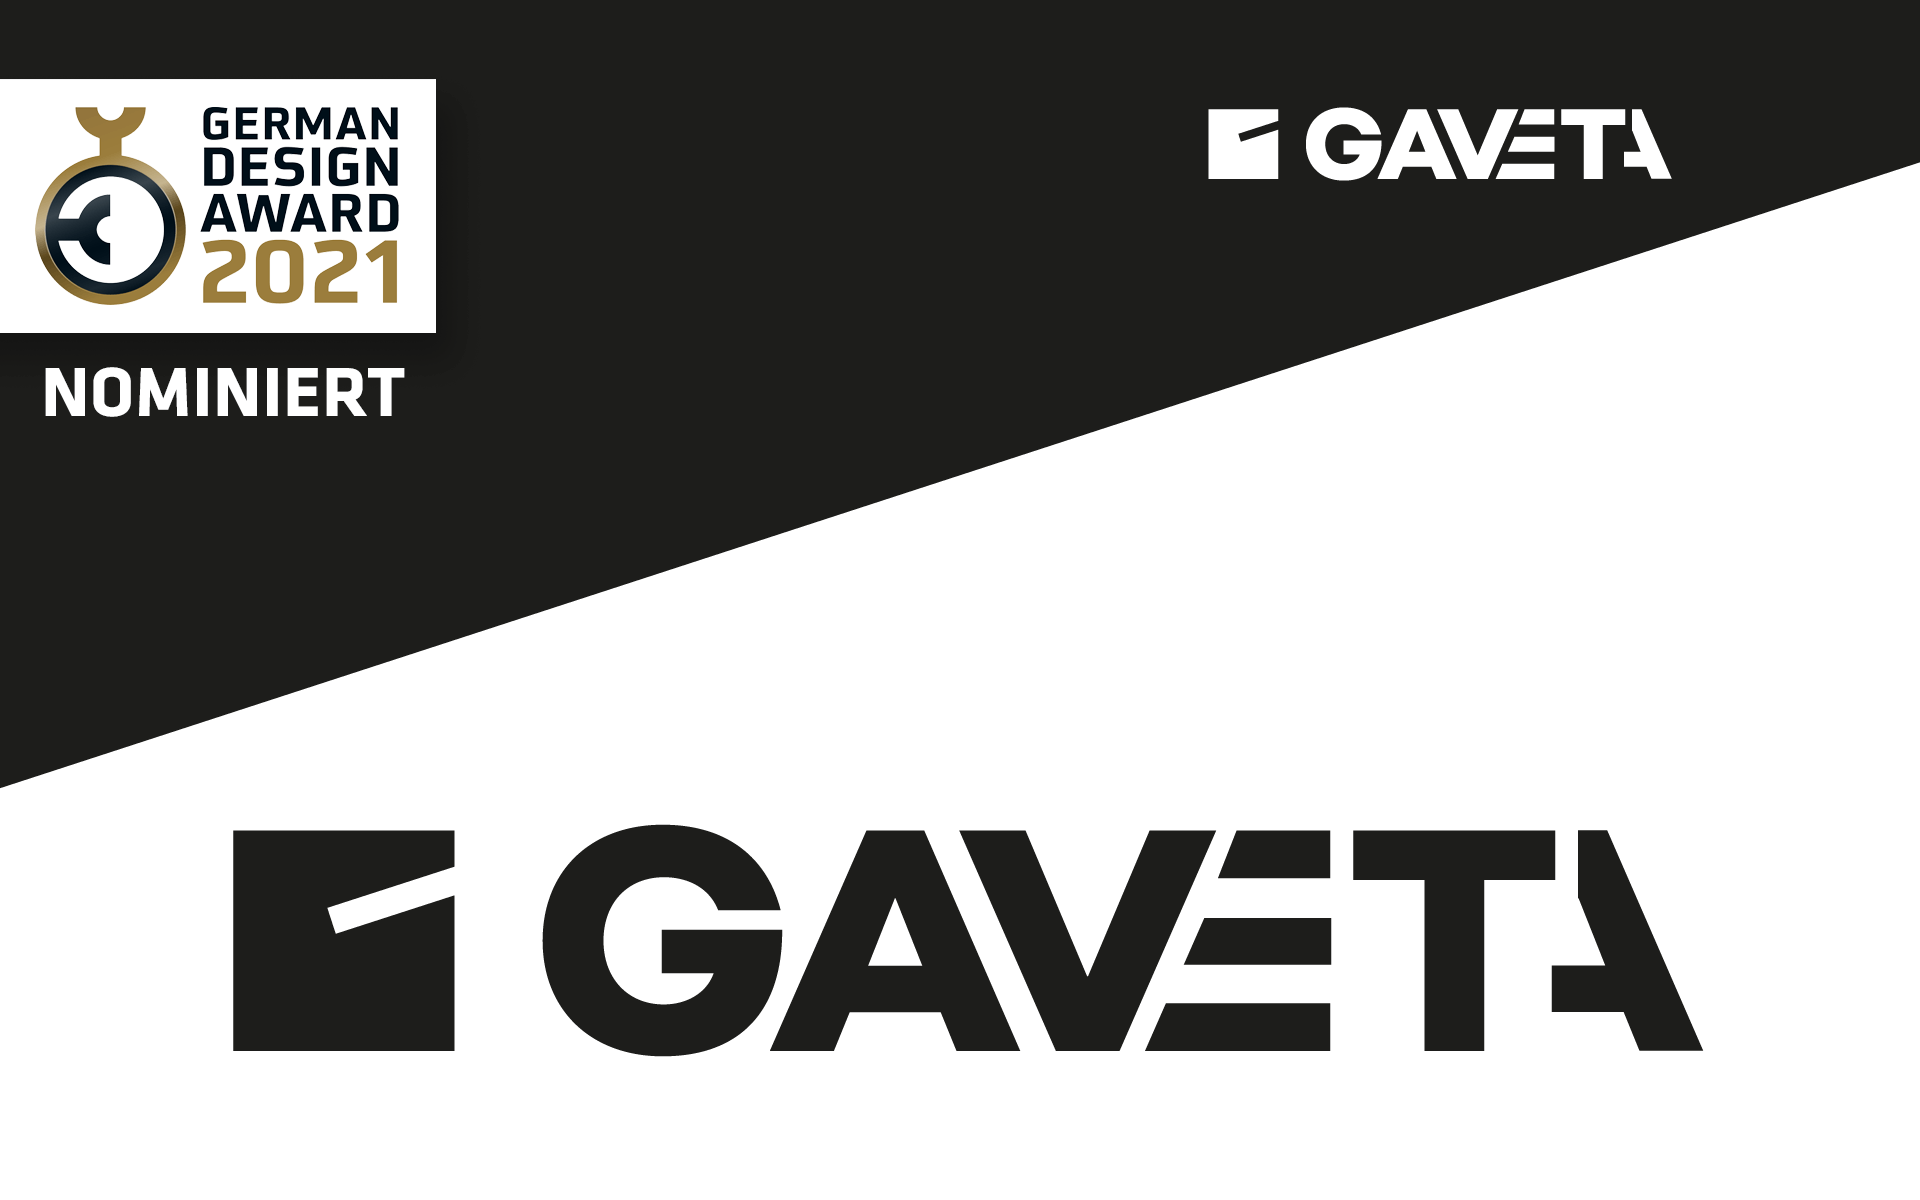 German Design Award Nominee, GAVETA-Logotype, Corporate Design